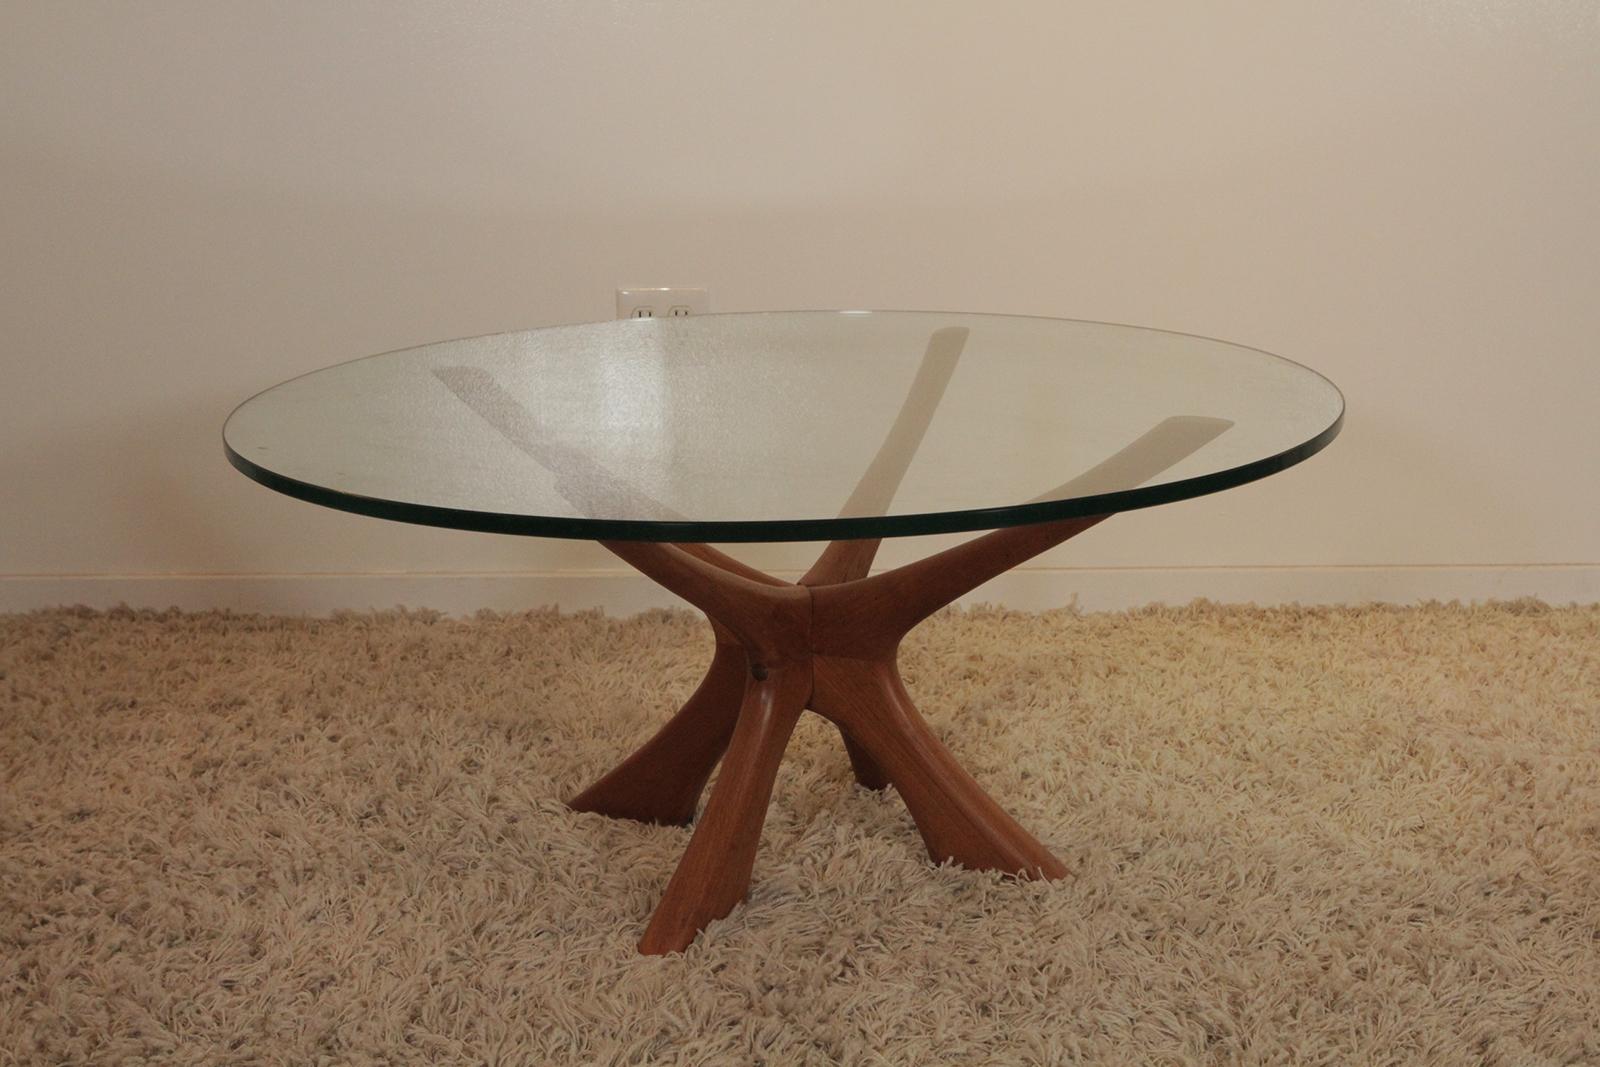 Midcentury Illum Wikkelsø coffee table, Denmark in original condition
Dimensions: 39